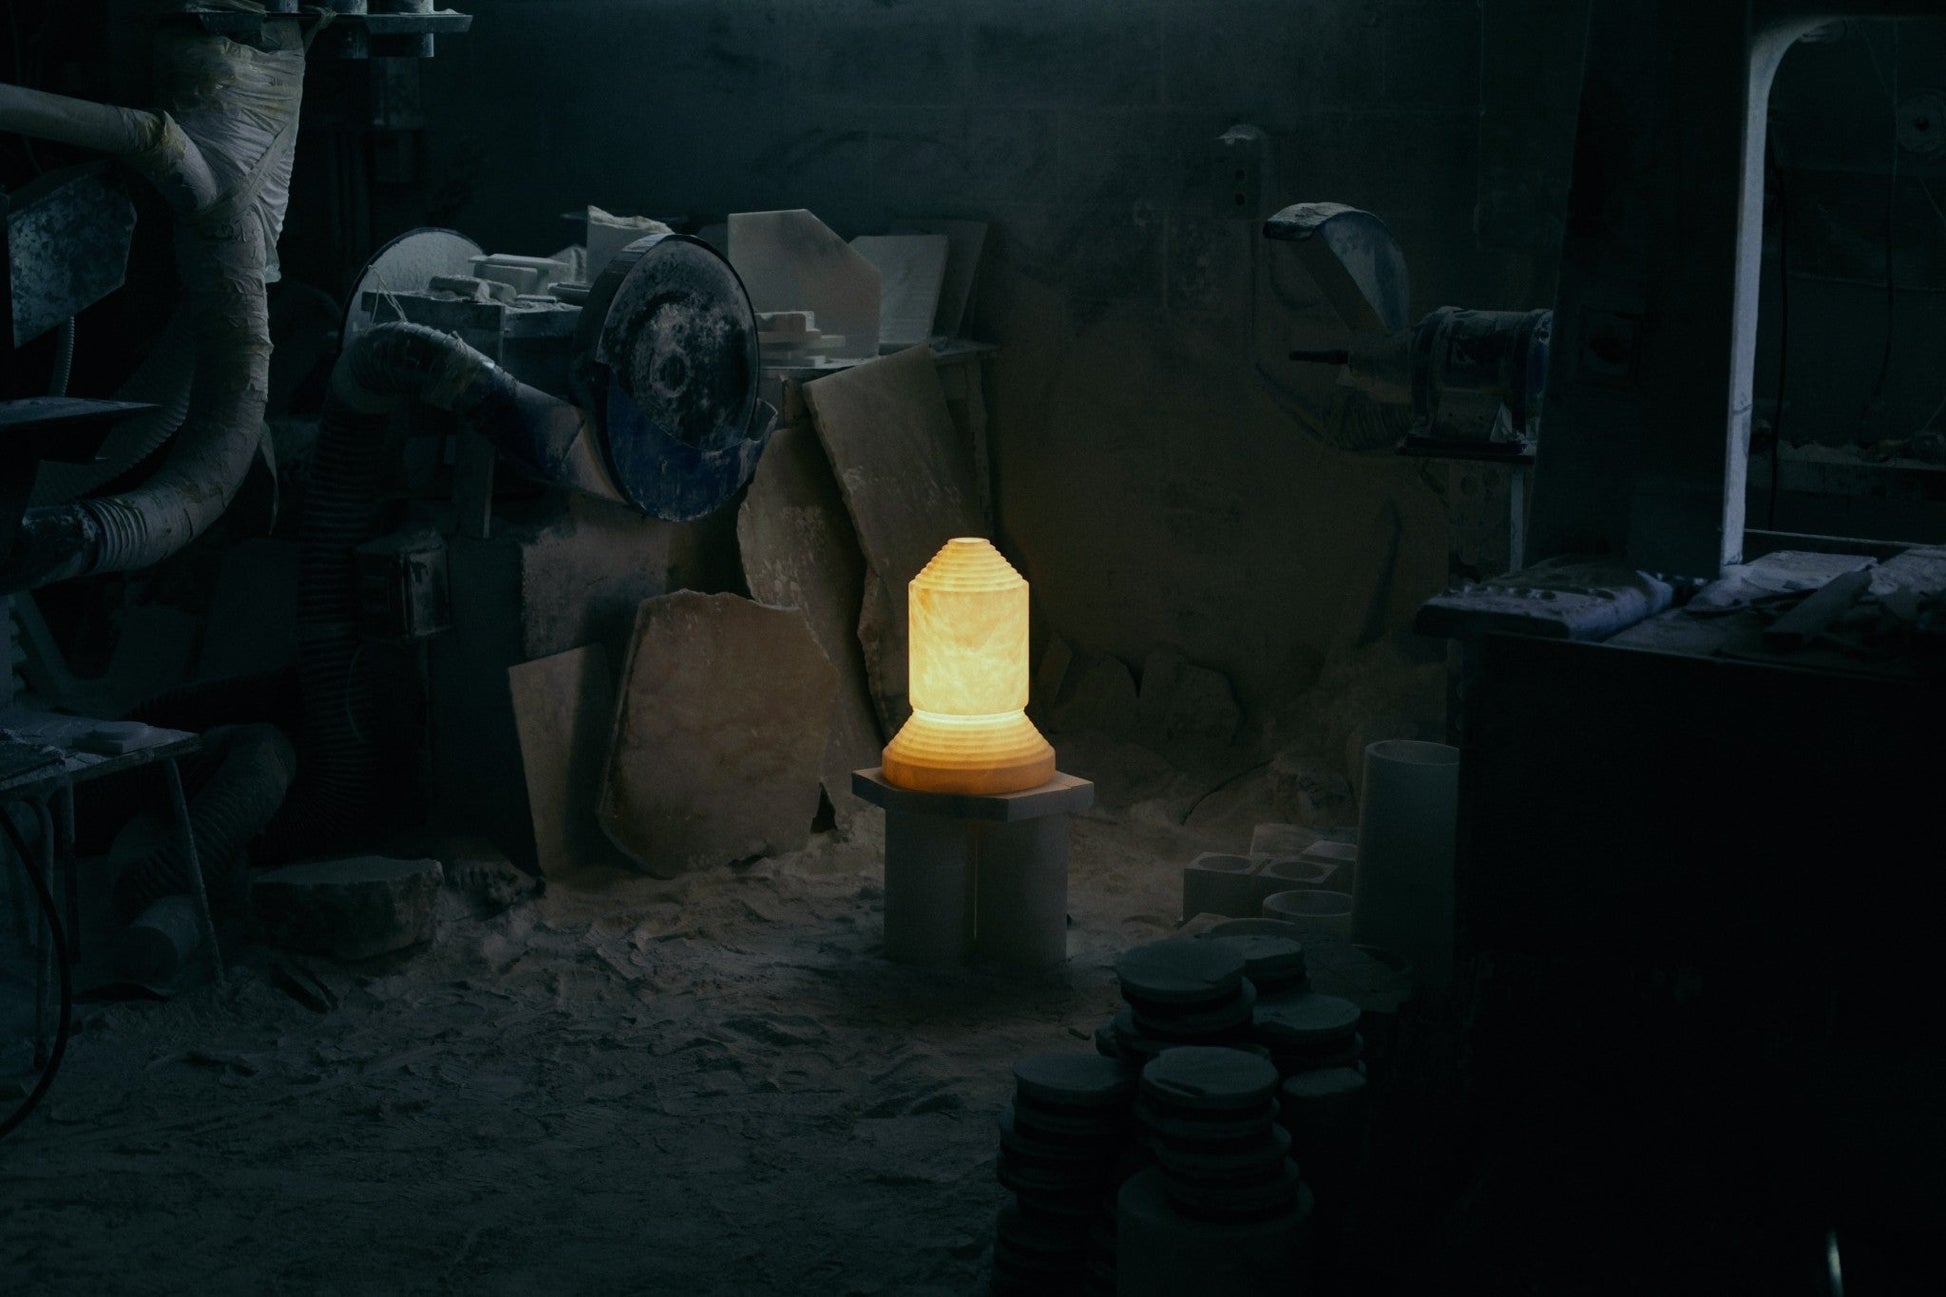 Santa & Cole Babel Table Lamp